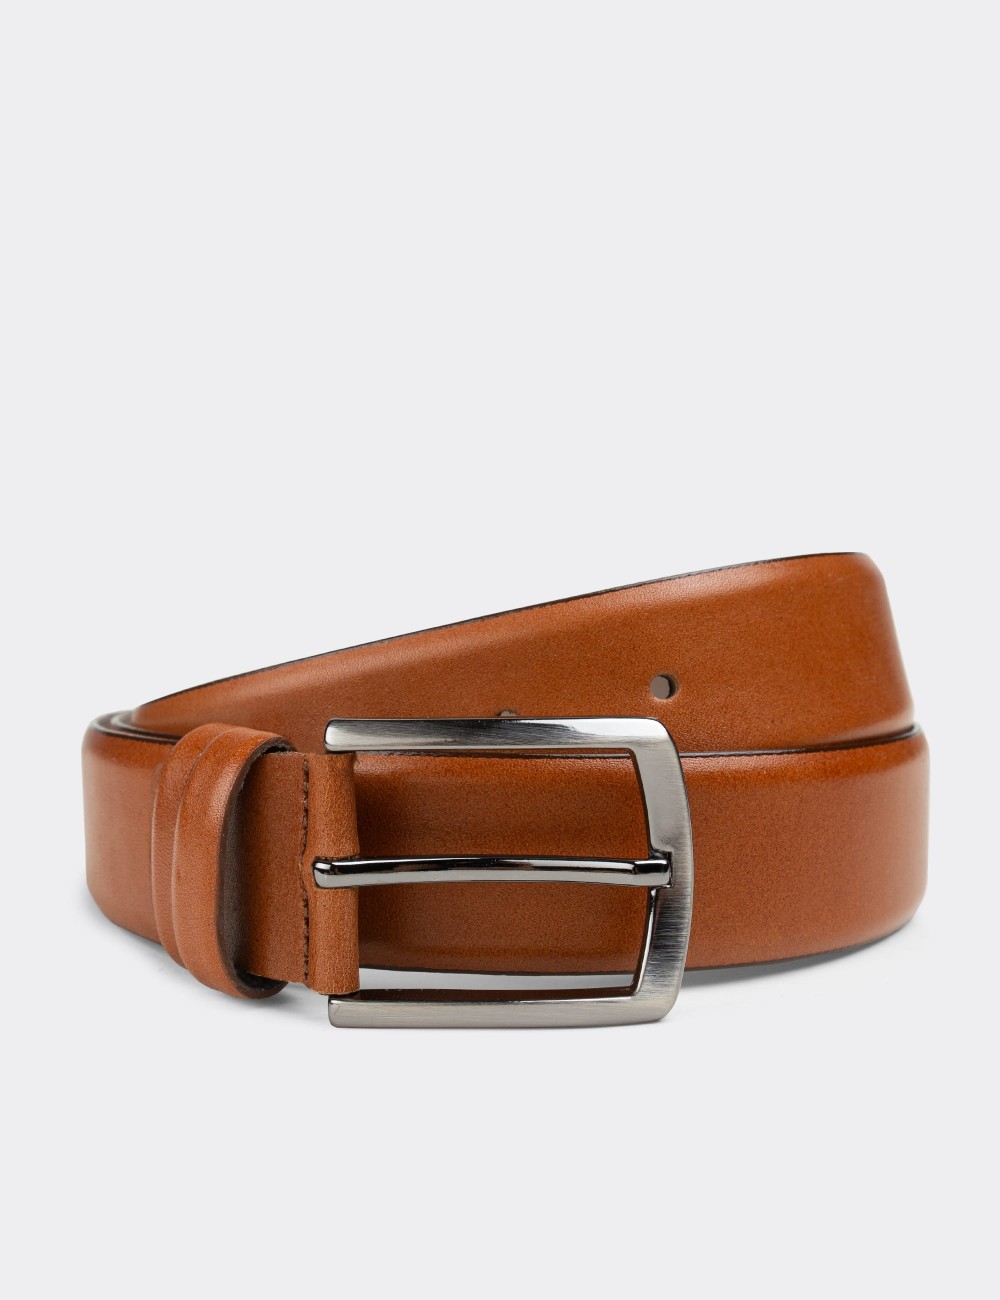  Leather Tan Men's Belt - K0403MTBAW01